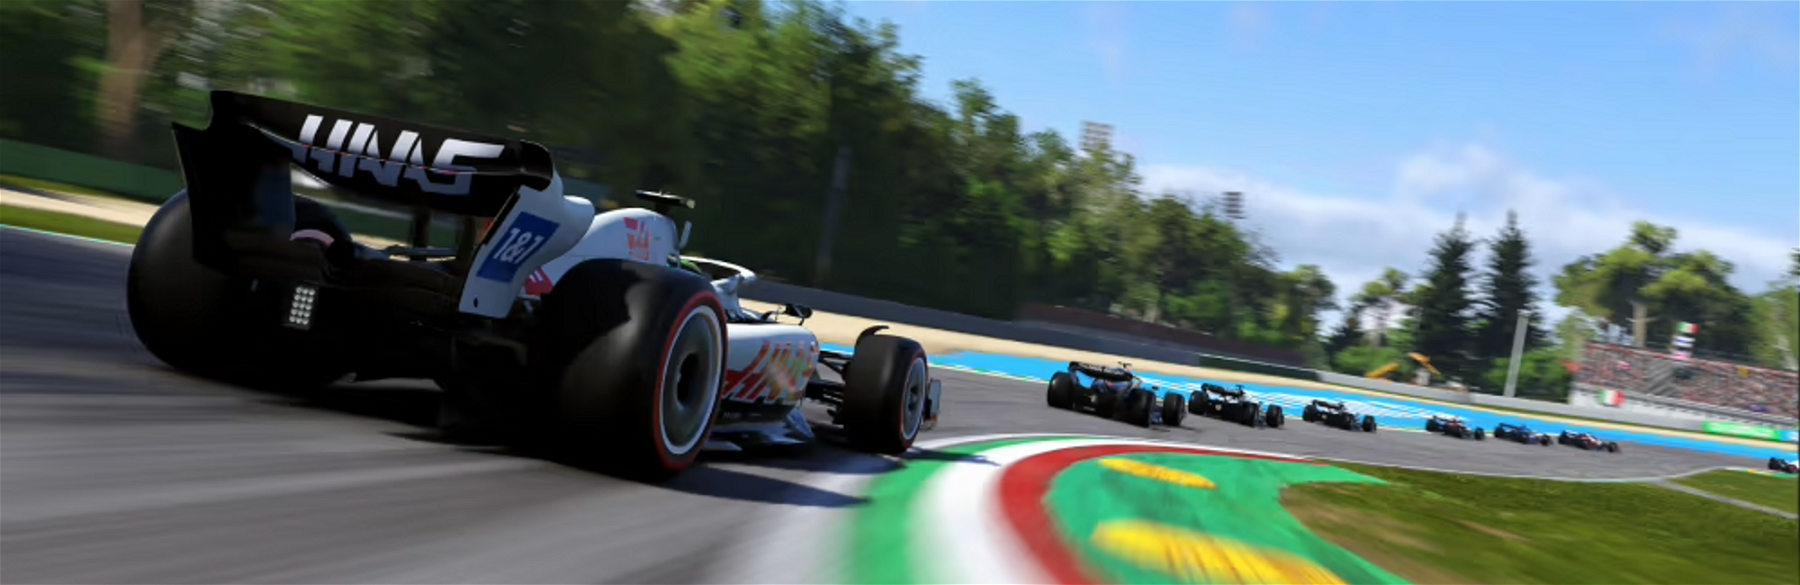 F1 23 Game: Esports Time Trial Leaderboard Setups